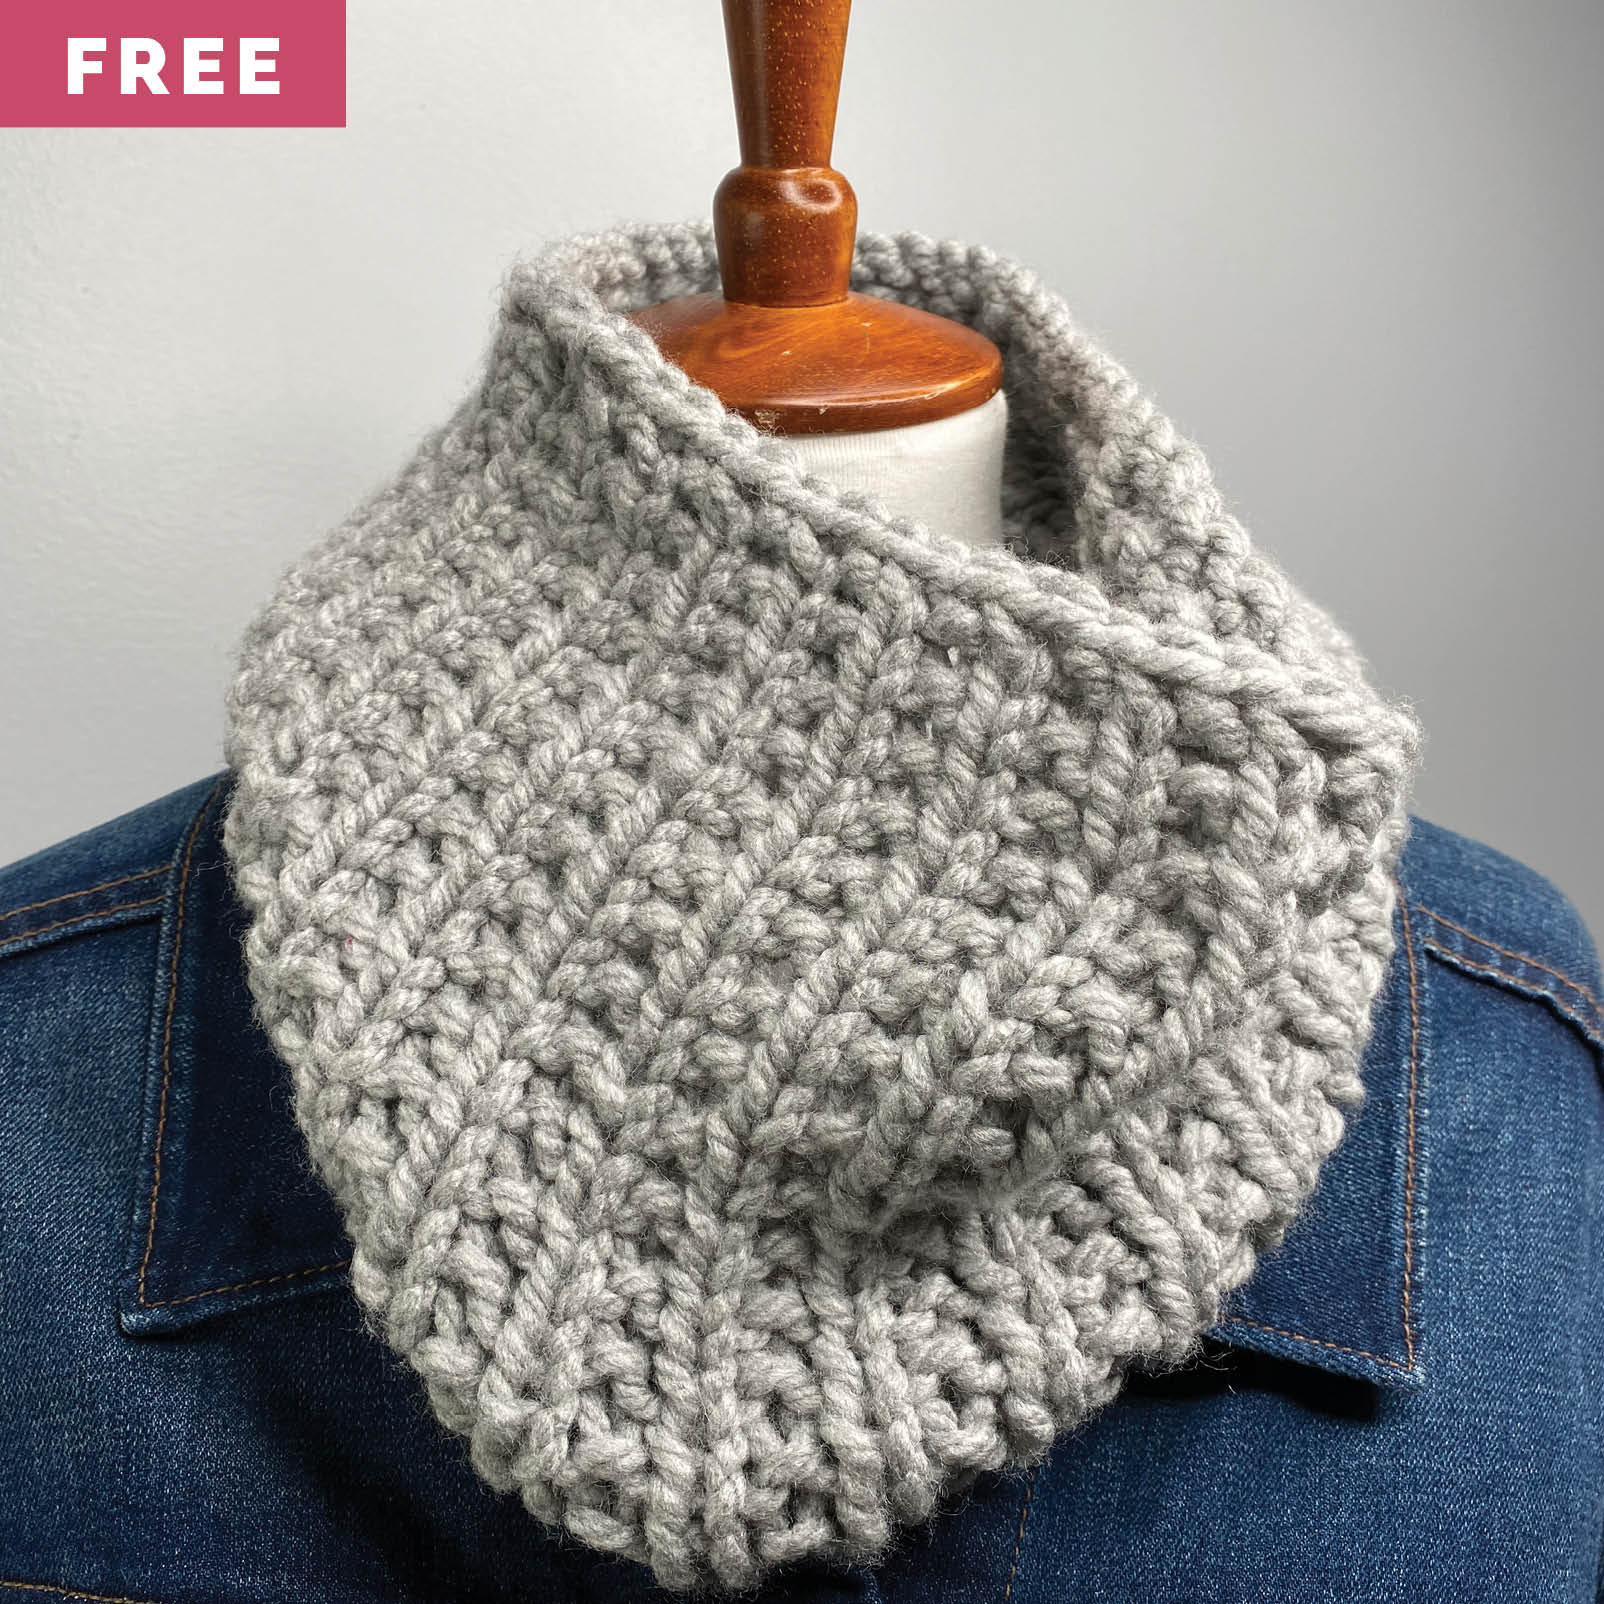 Free Knitting Pattern - Chunky Broken Rib Cowl